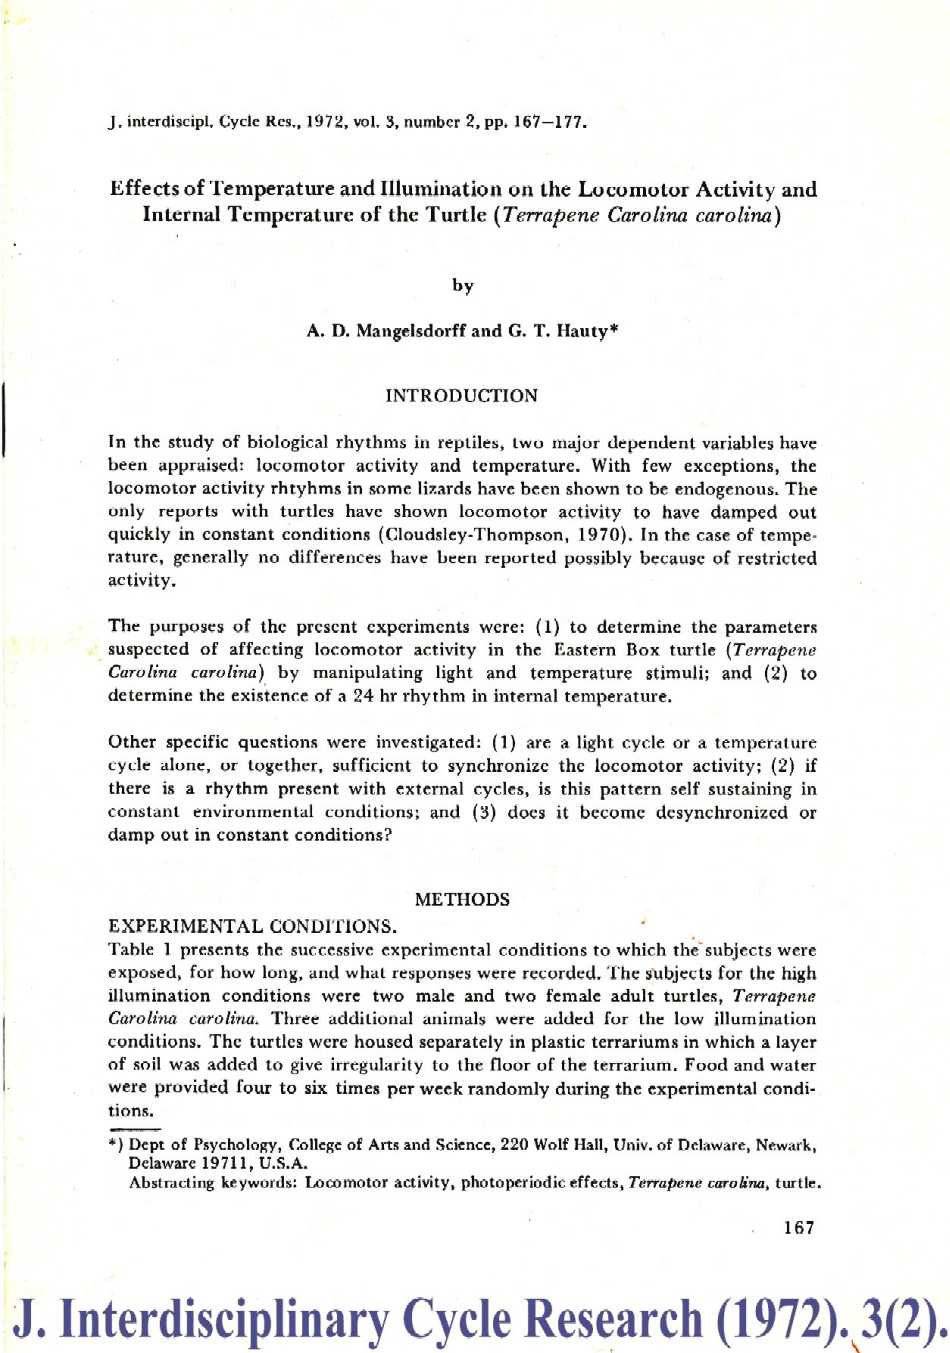 Journal Interdisciplinary Cycle Research (1972): Effects of temperature 
and illumination on the locomotor activity and internal temperature of the 
turtle (Terrapene Carolina carolina)